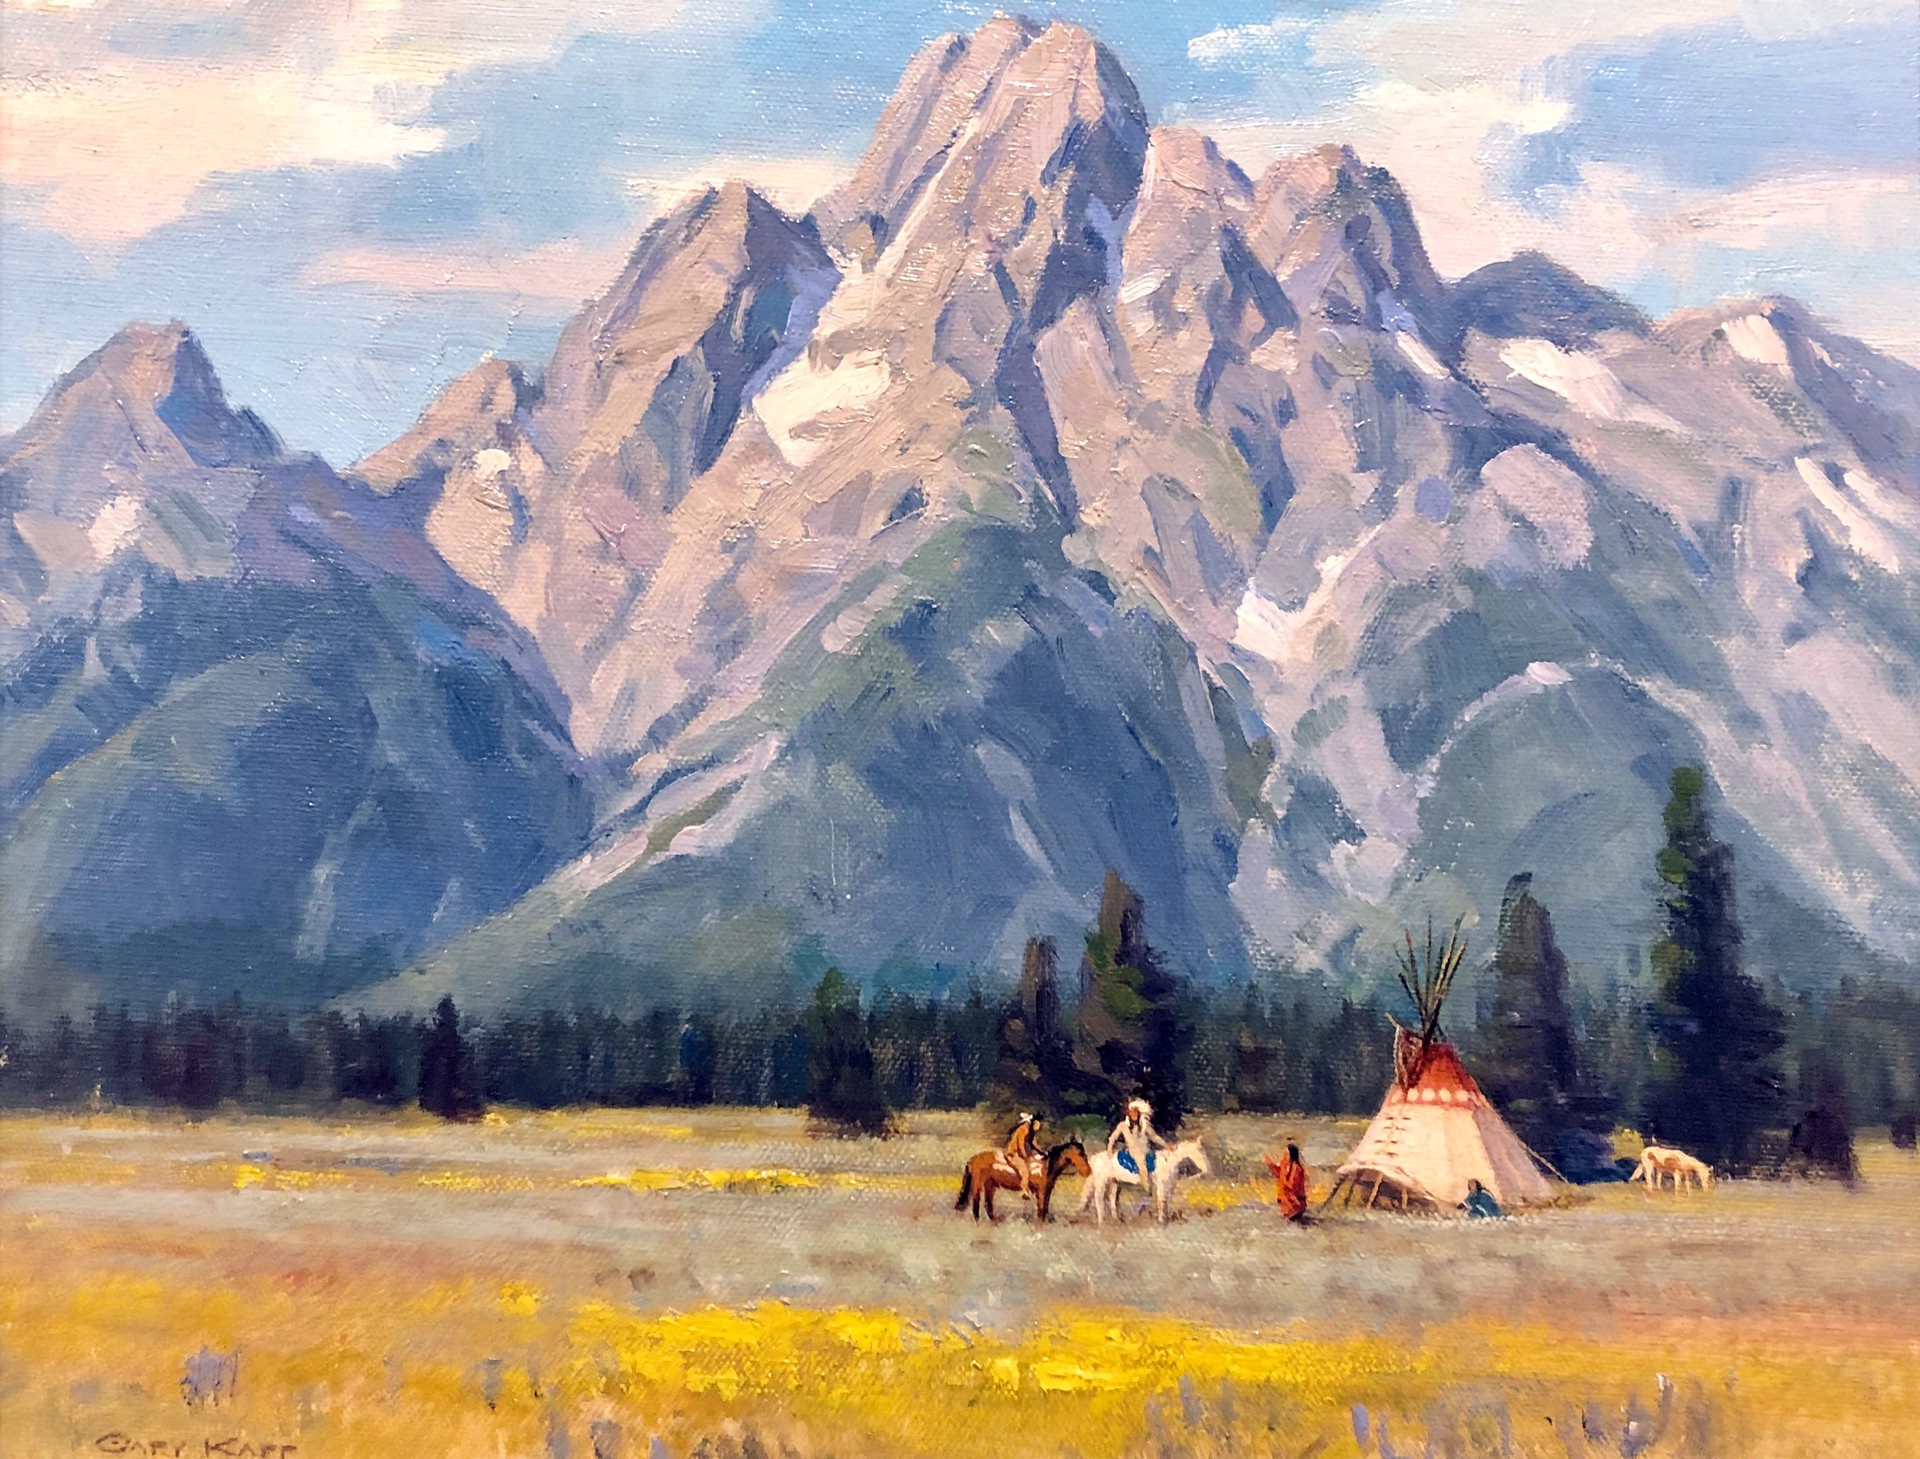 Chief's Camp by Gary Kapp